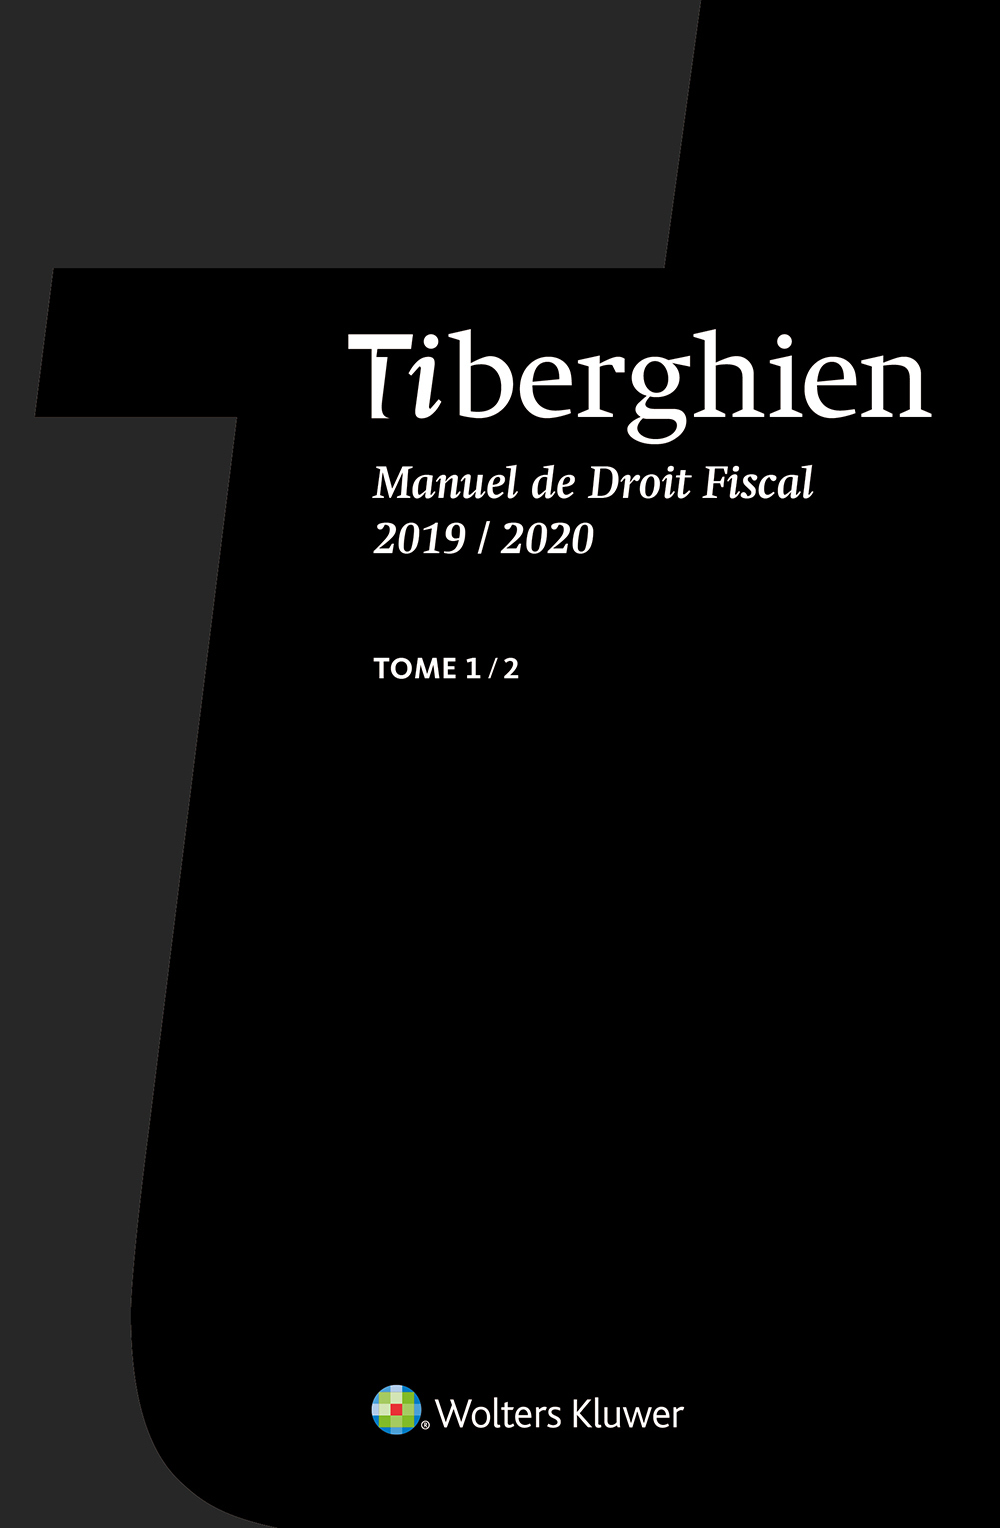 TIB FR HANDBOEK COVER